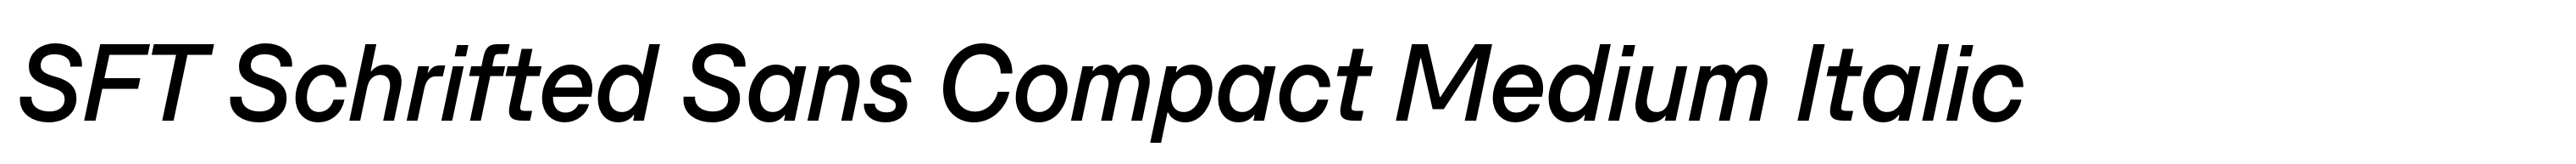 SFT Schrifted Sans Compact Medium Italic